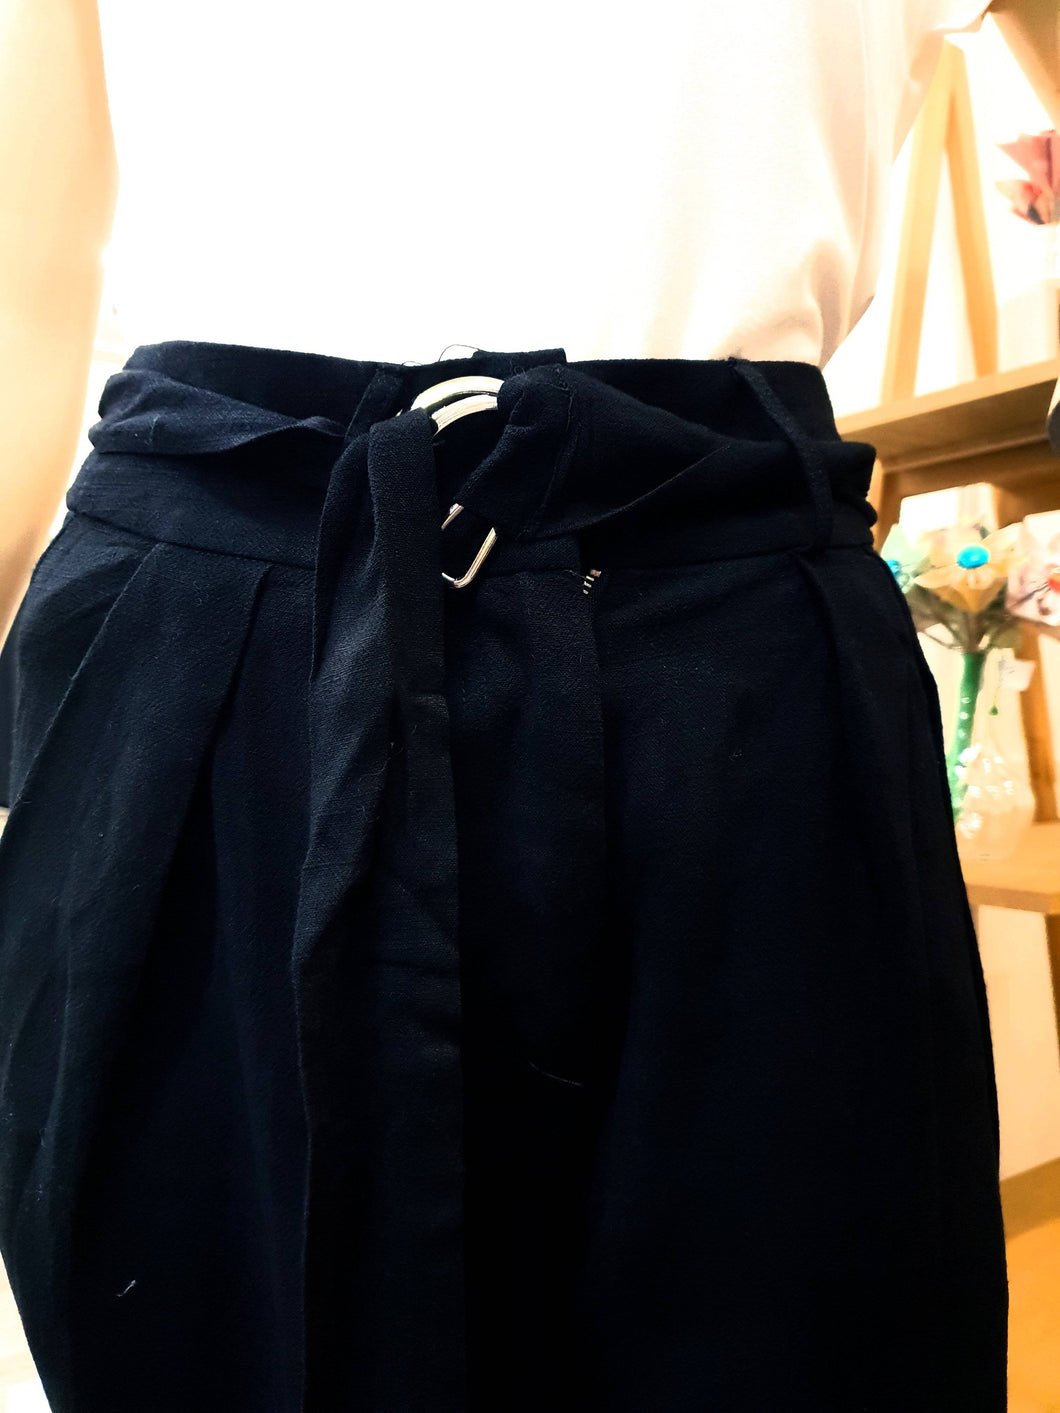 Pants Black Women's Cuffed Bottom Trousers Cotton Wide Leg Hem Pockets Belt Loops - Tracey Glynn Fashions